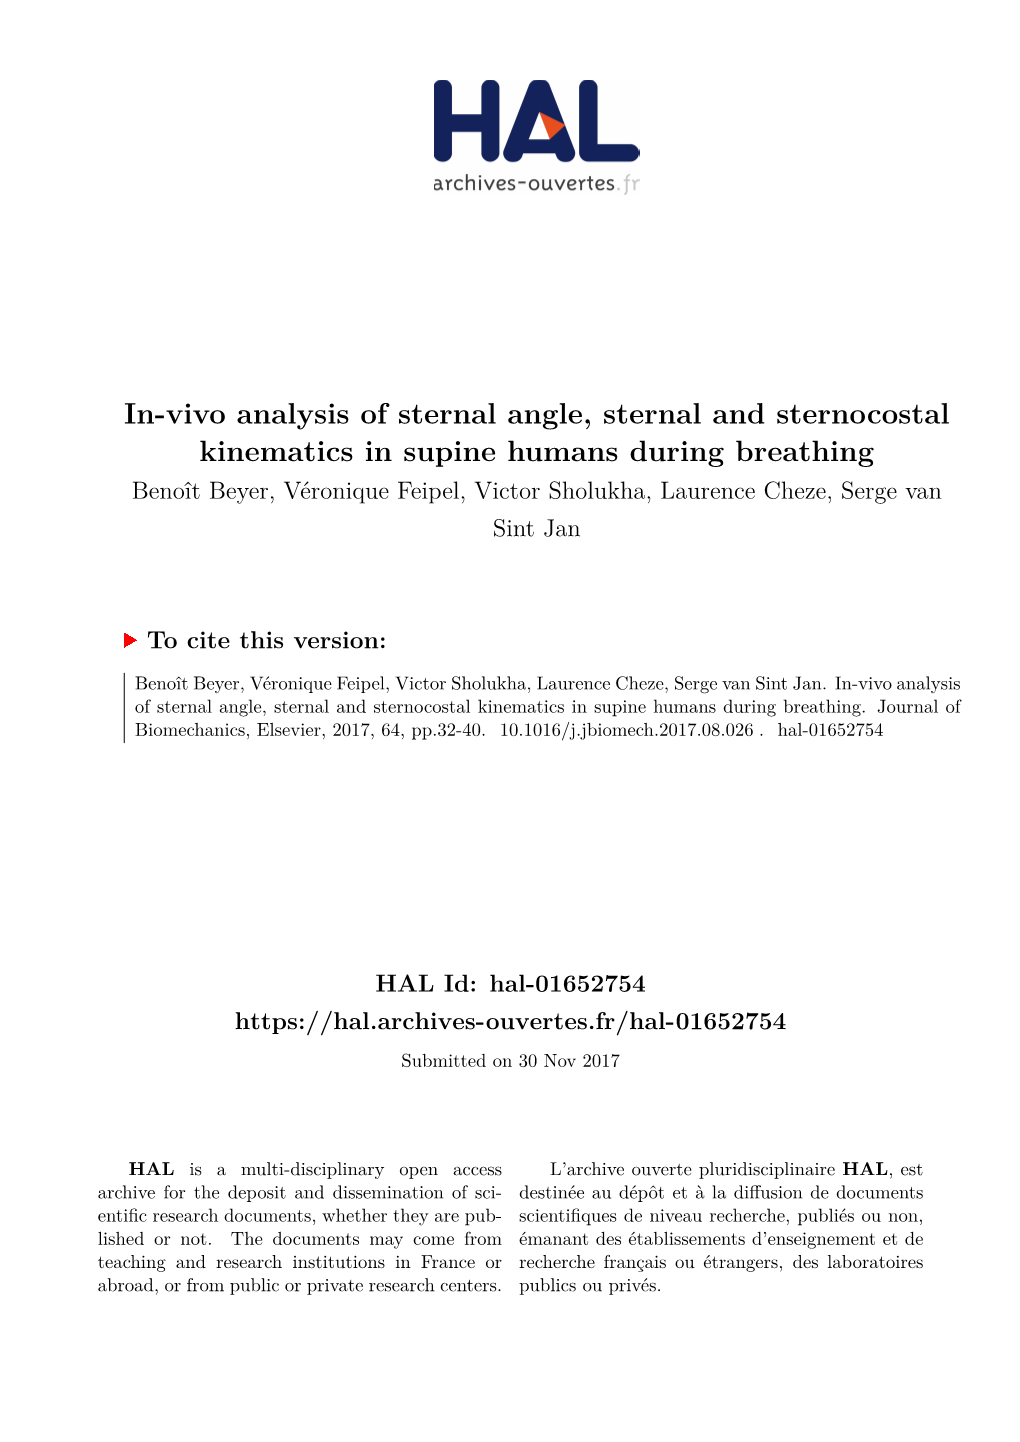 In-Vivo Analysis of Sternal Angle, Sternal and Sternocostal Kinematics